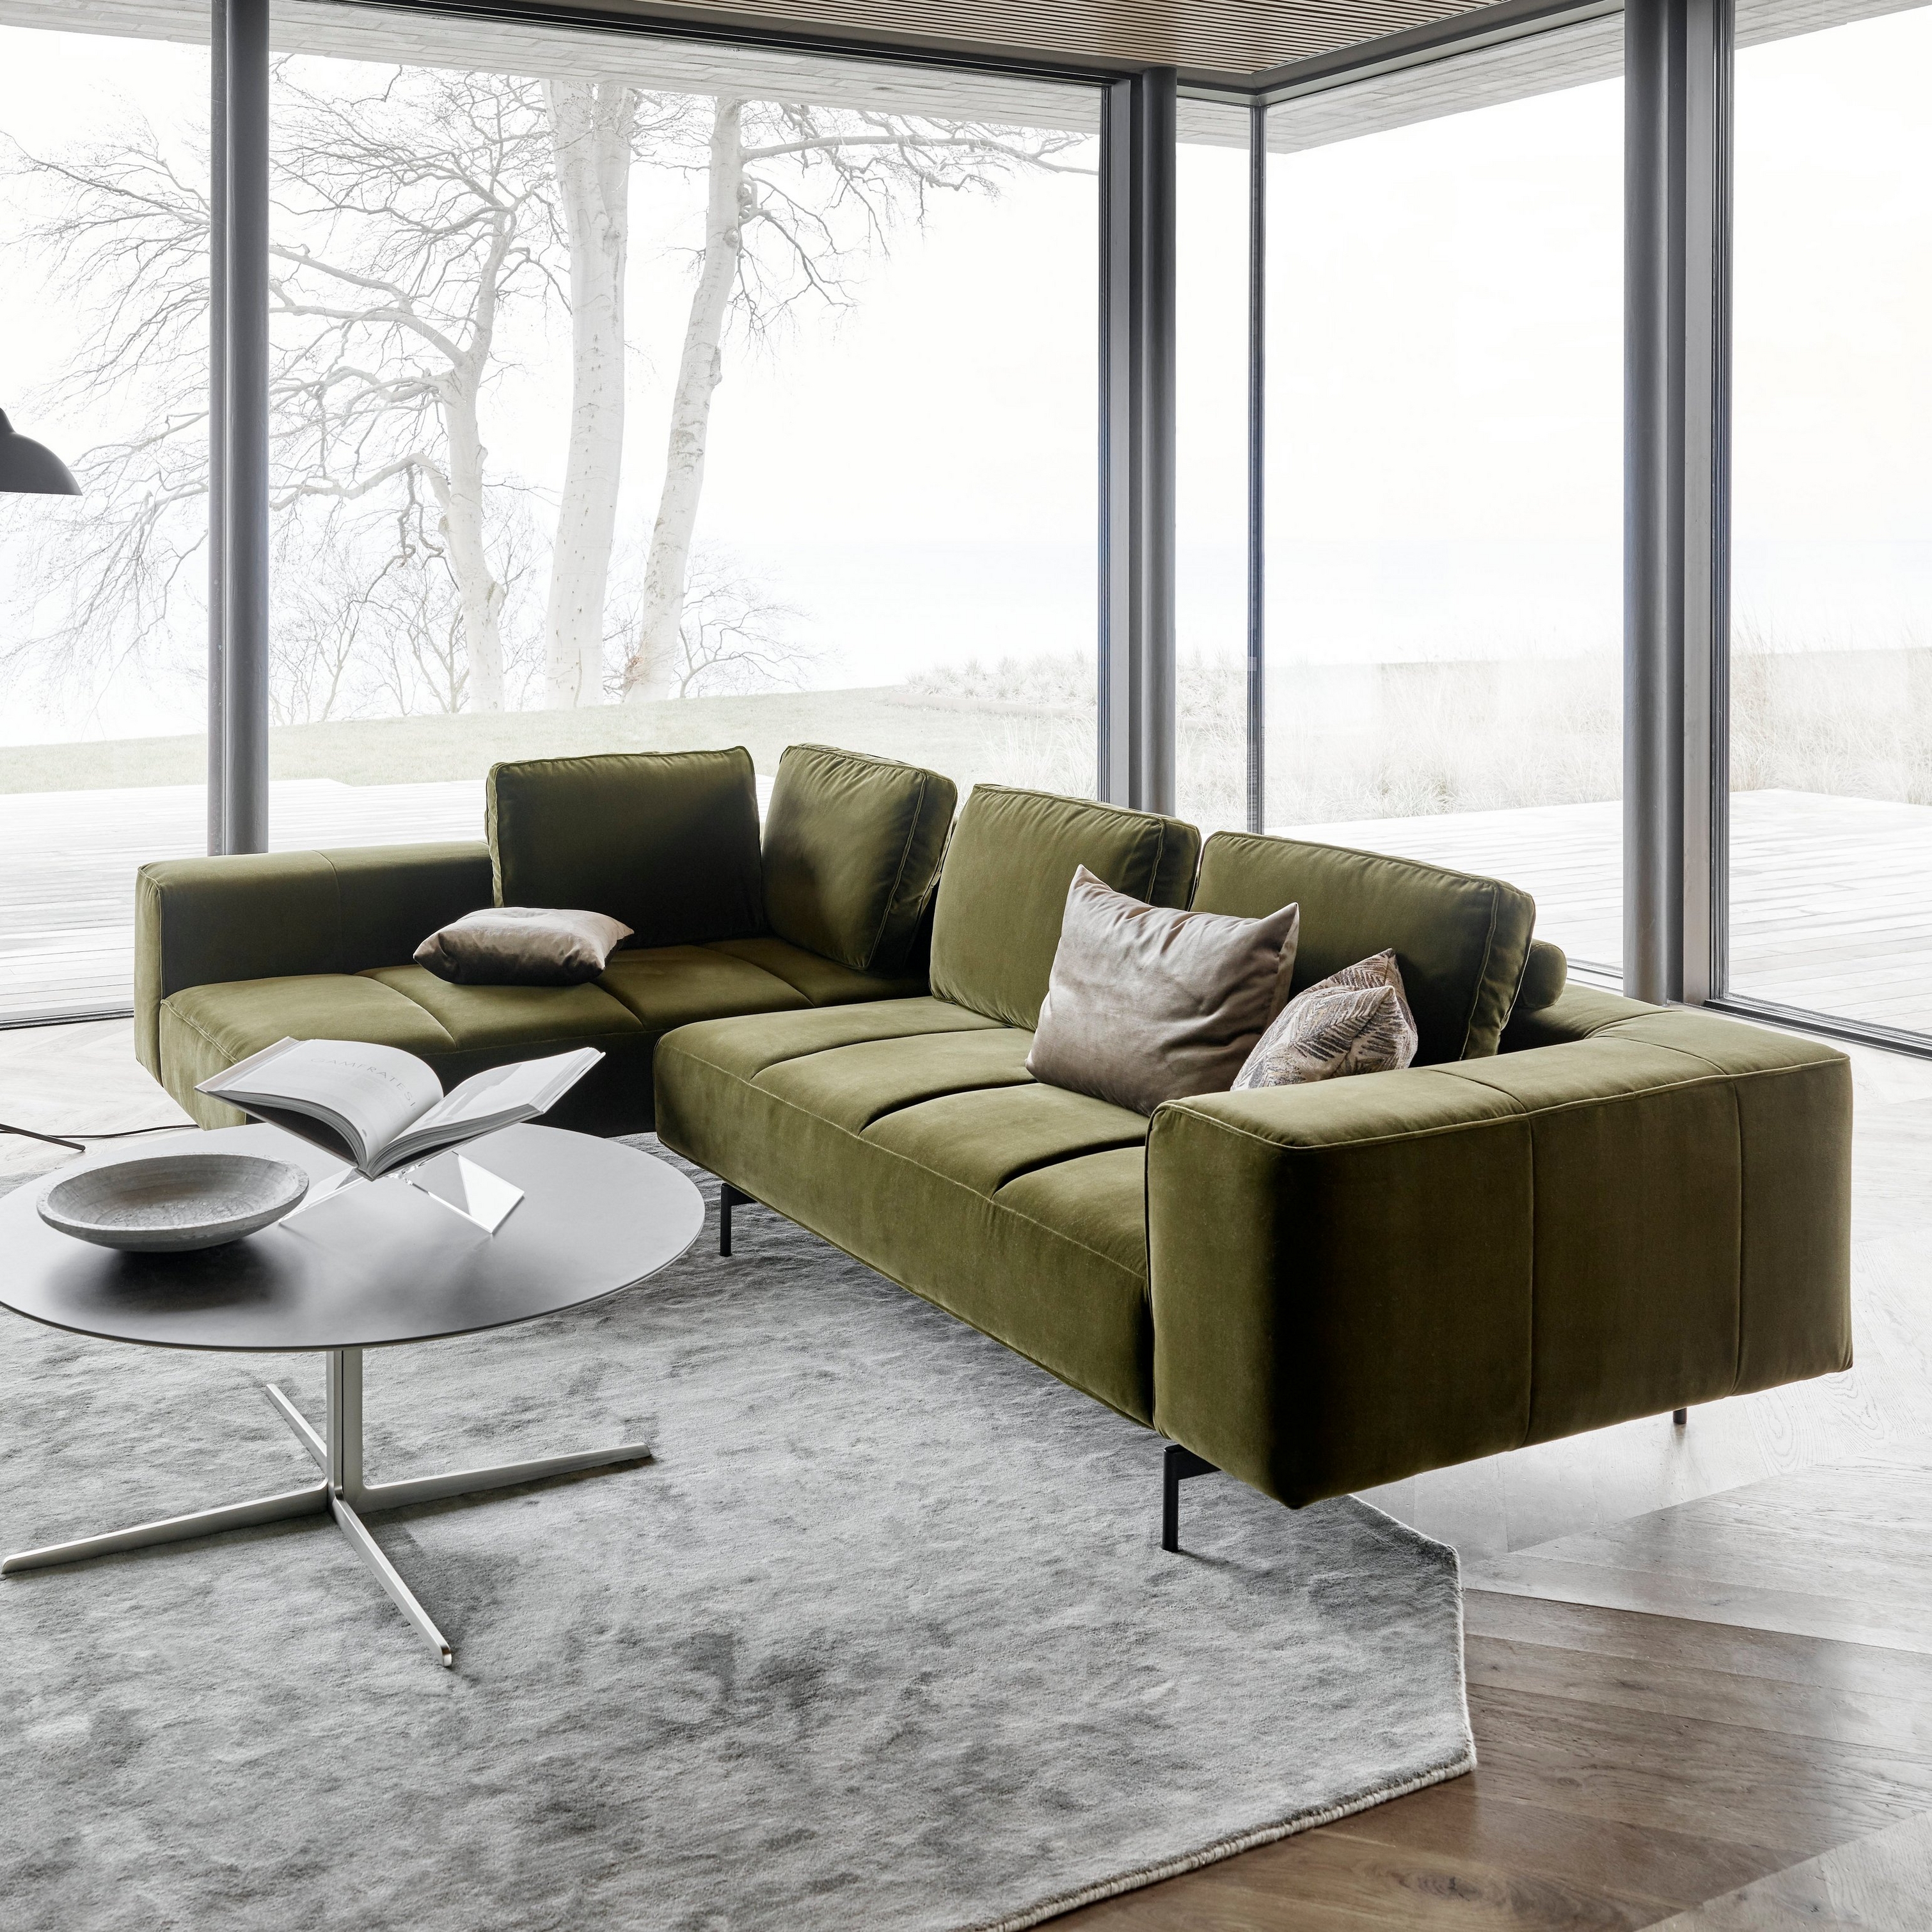 Moderno sofá Amsterdam verde, mesa de centro, lámpara de pie, junto a ventanas panorámicas con vistas al agua.